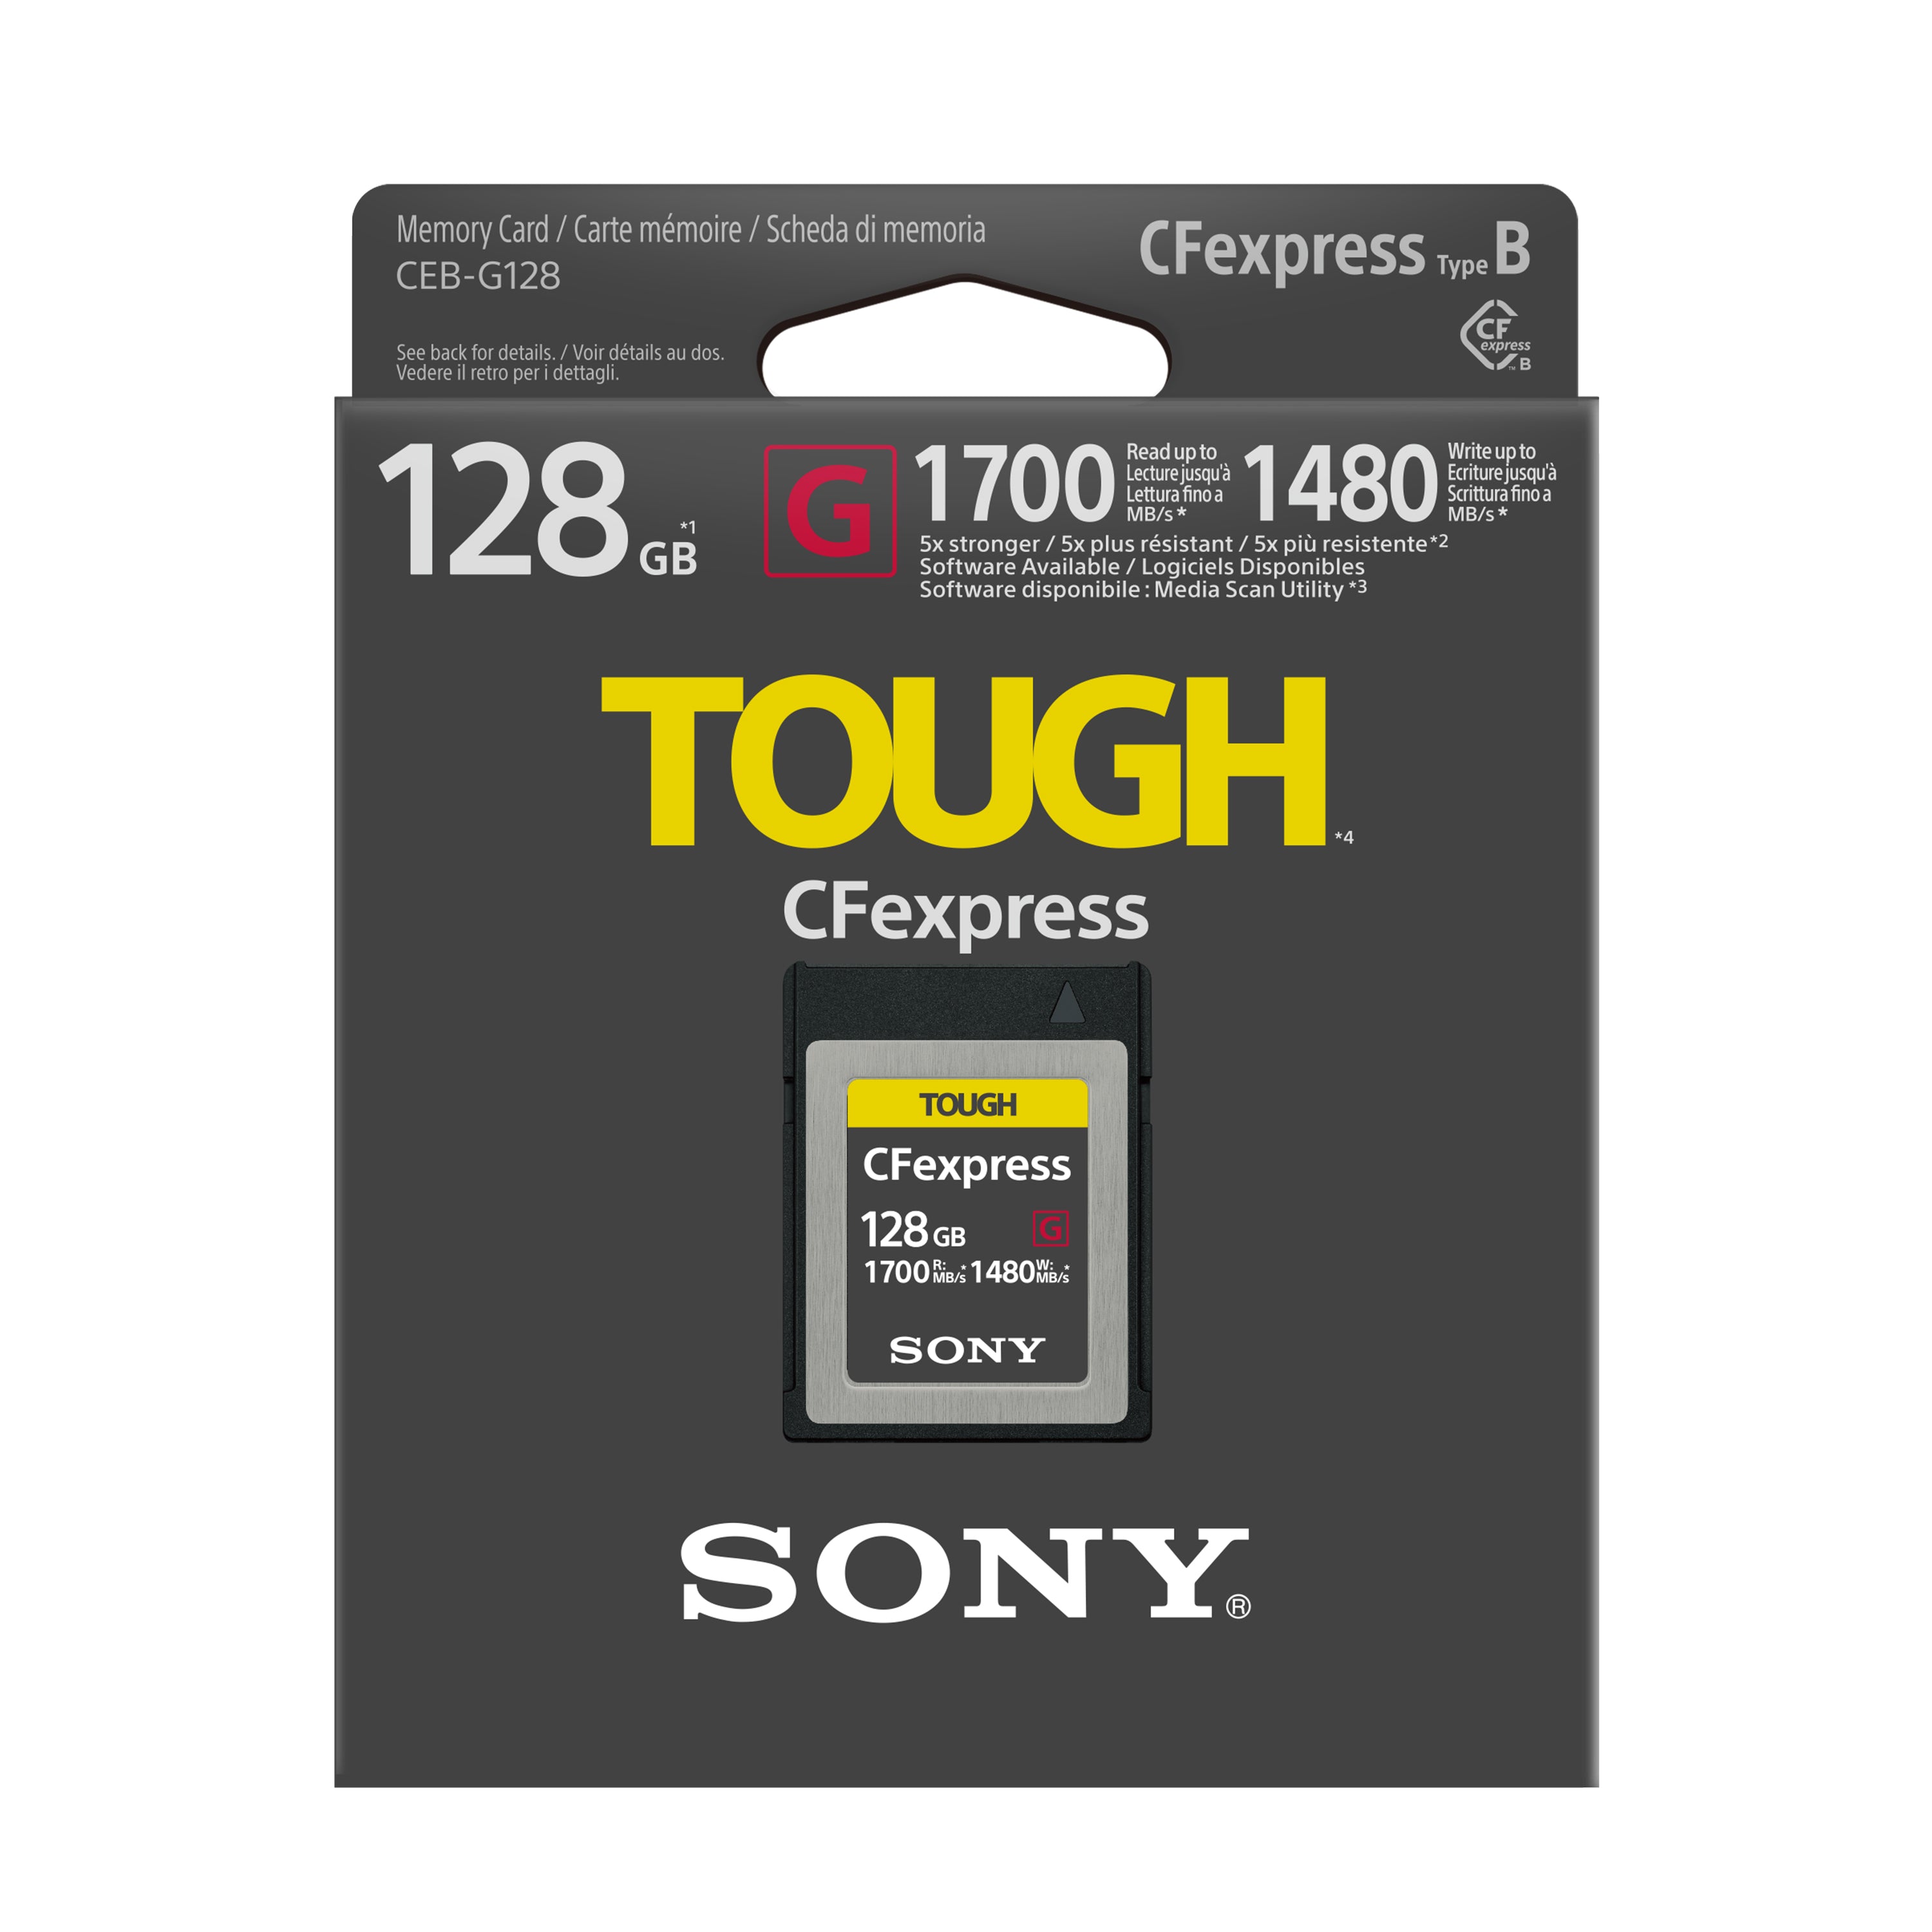 CEB-G Series CFexpress Type B 128GB Memory Card